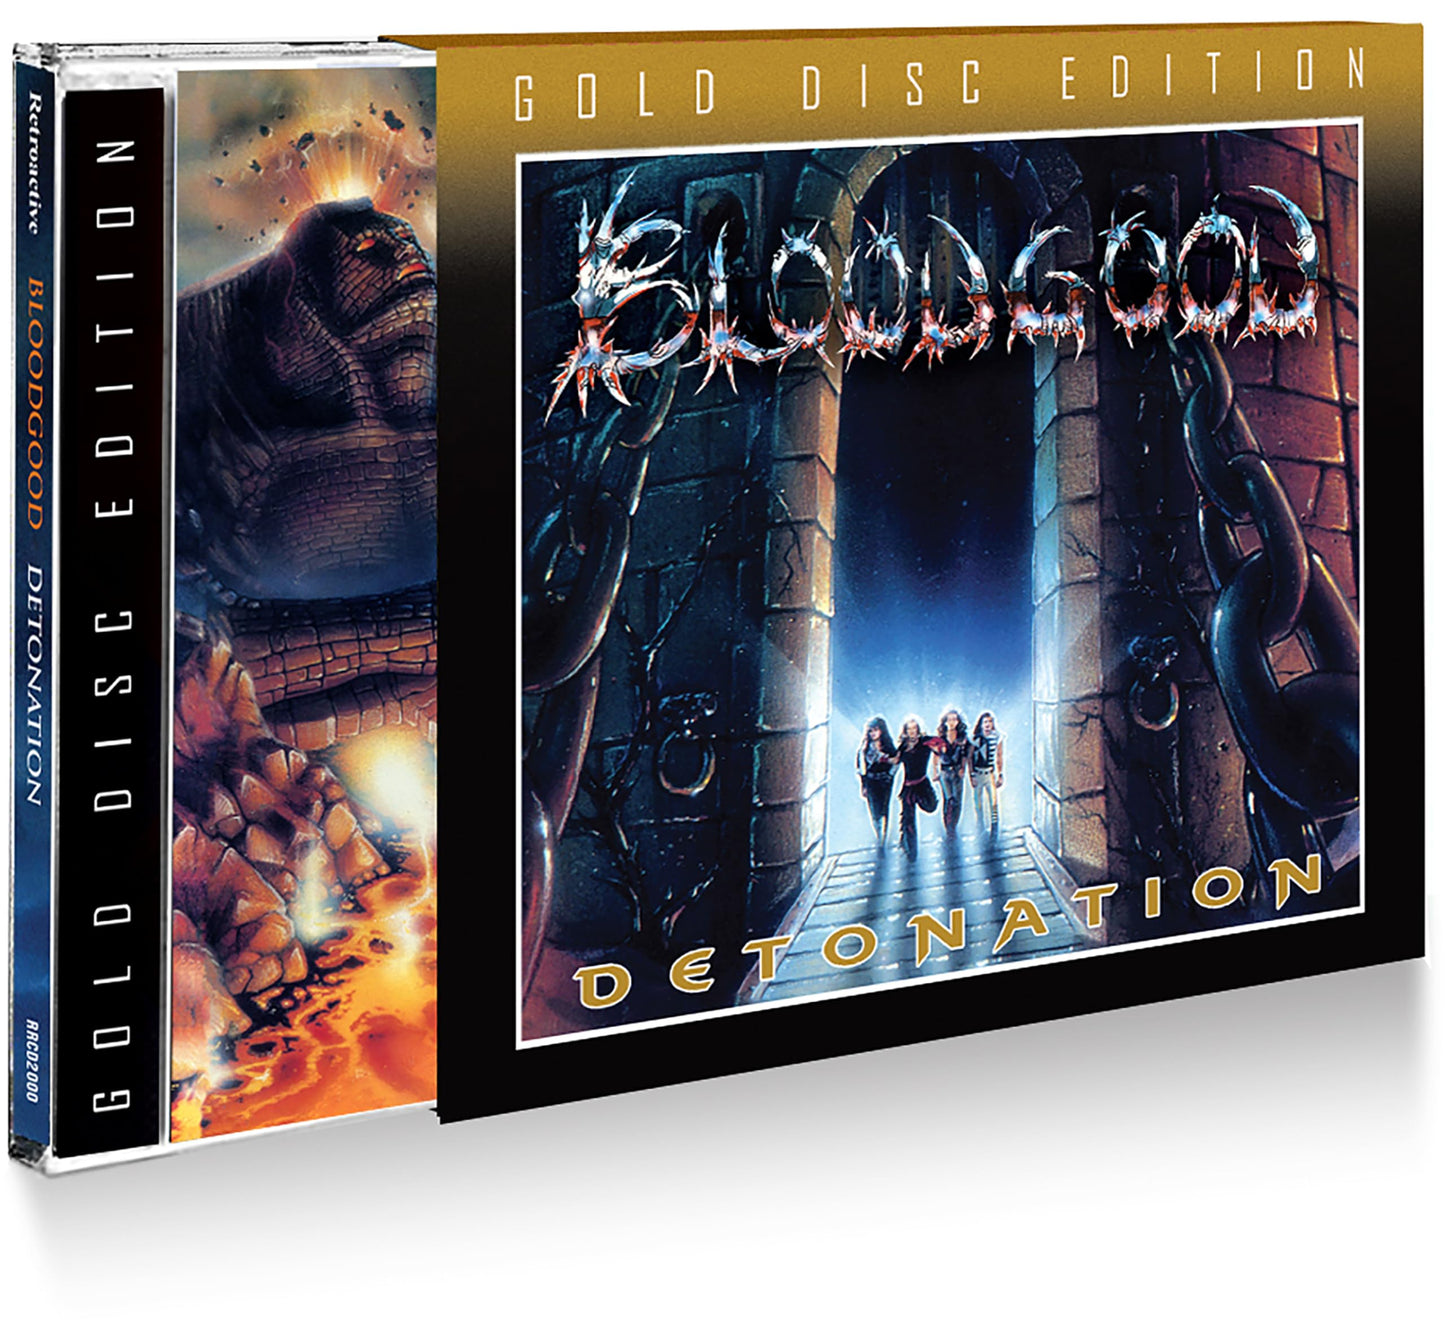 Bloodgood - Detonation - Import CD